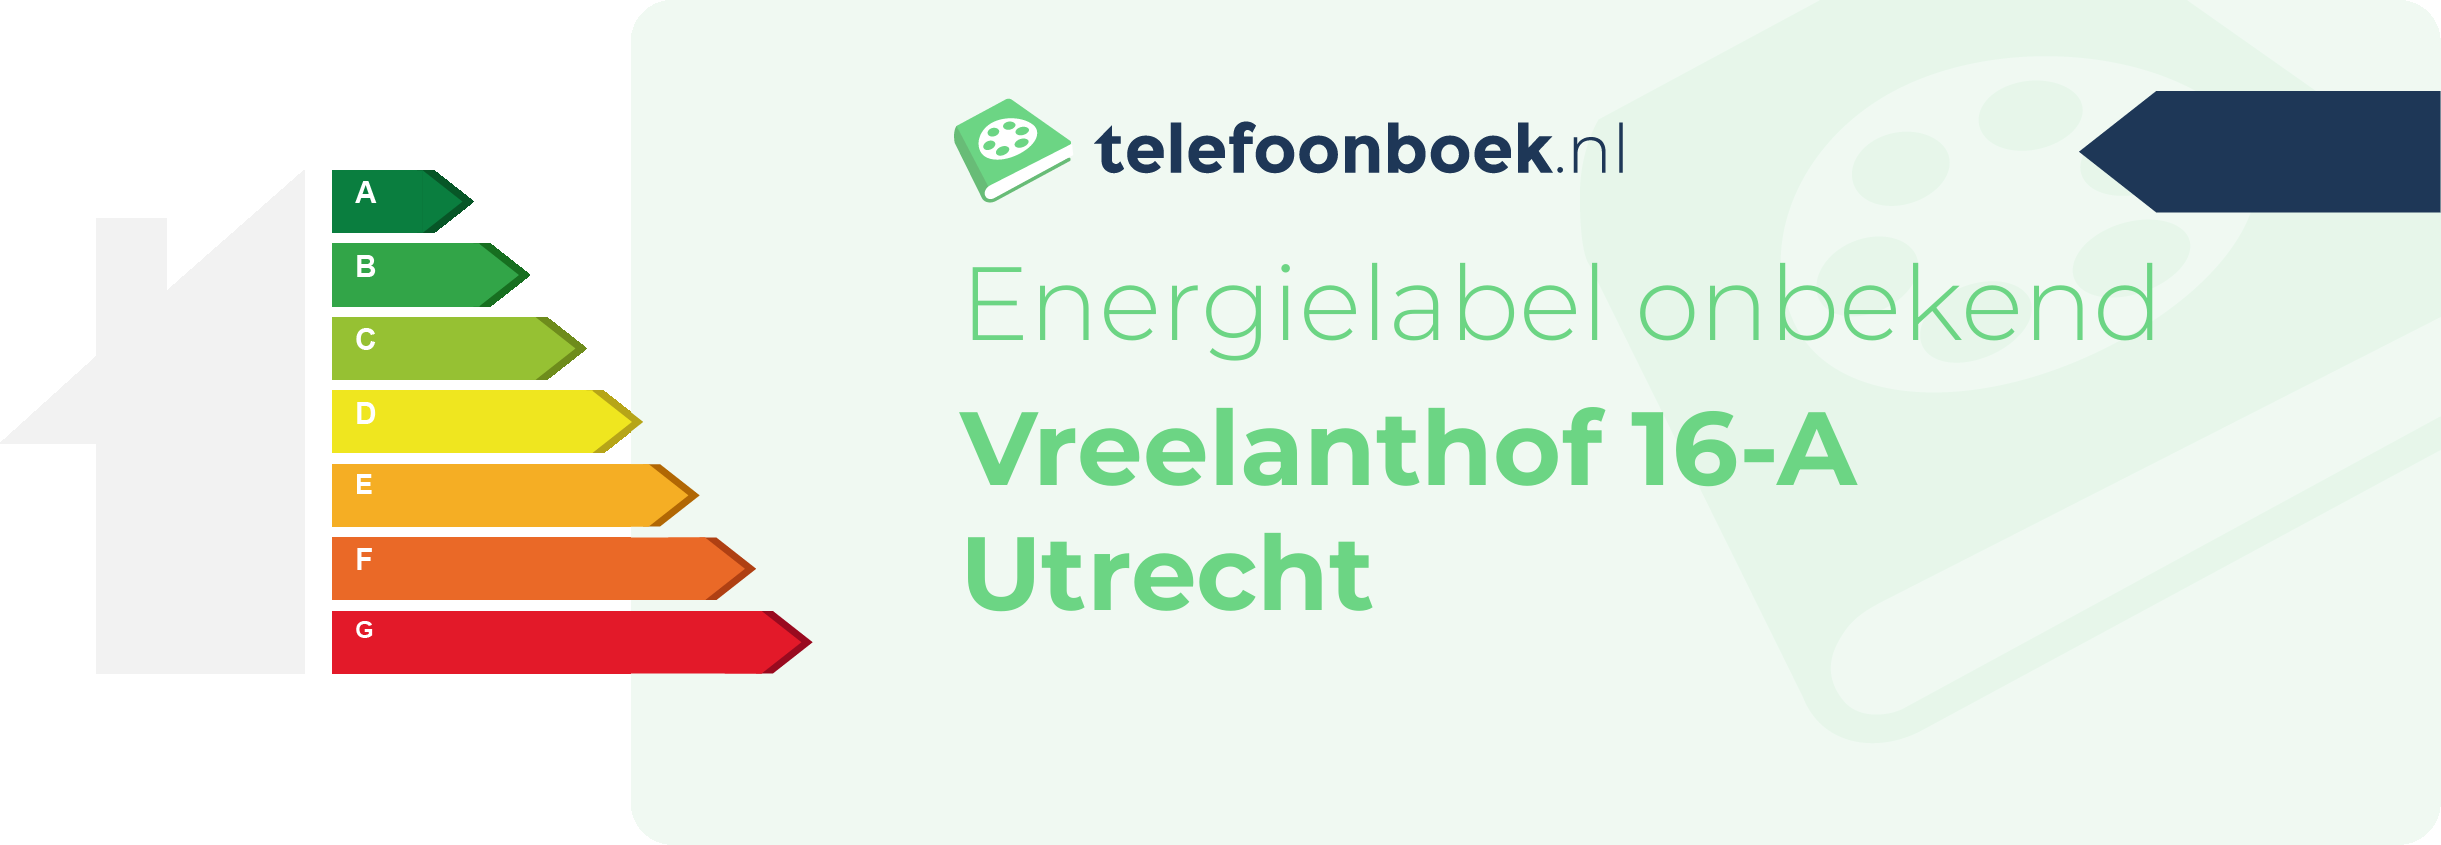 Energielabel Vreelanthof 16-A Utrecht